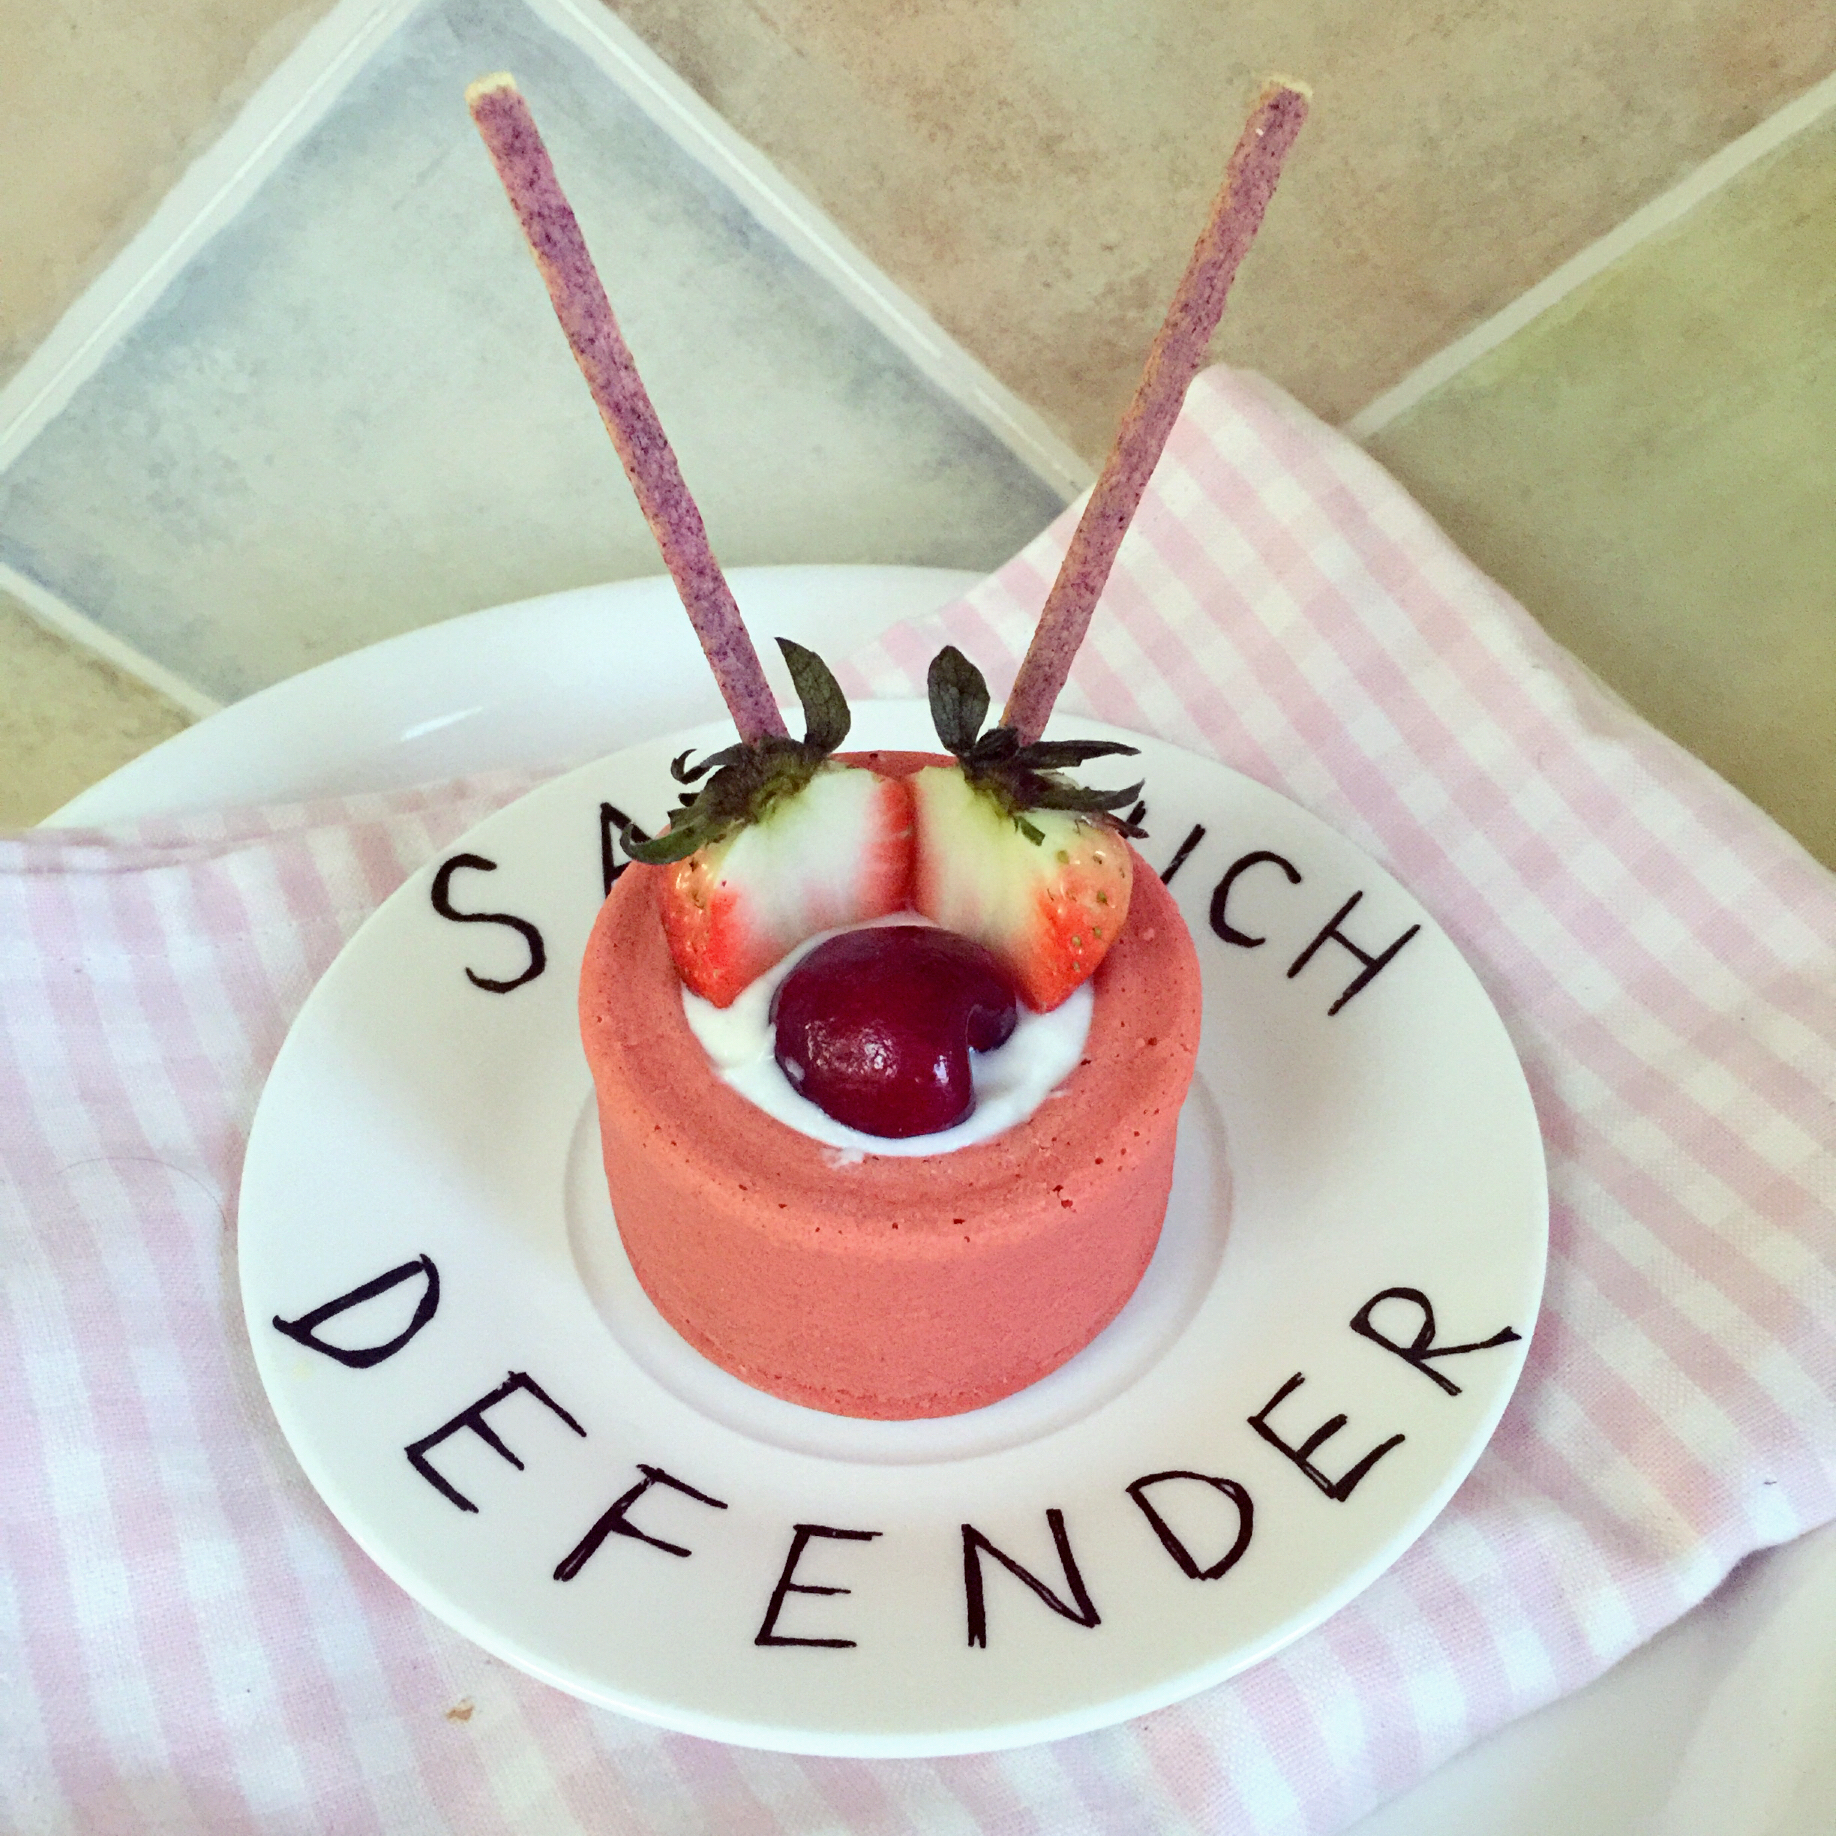 海绵蛋糕水果杯（chefmade堡尔美克模）